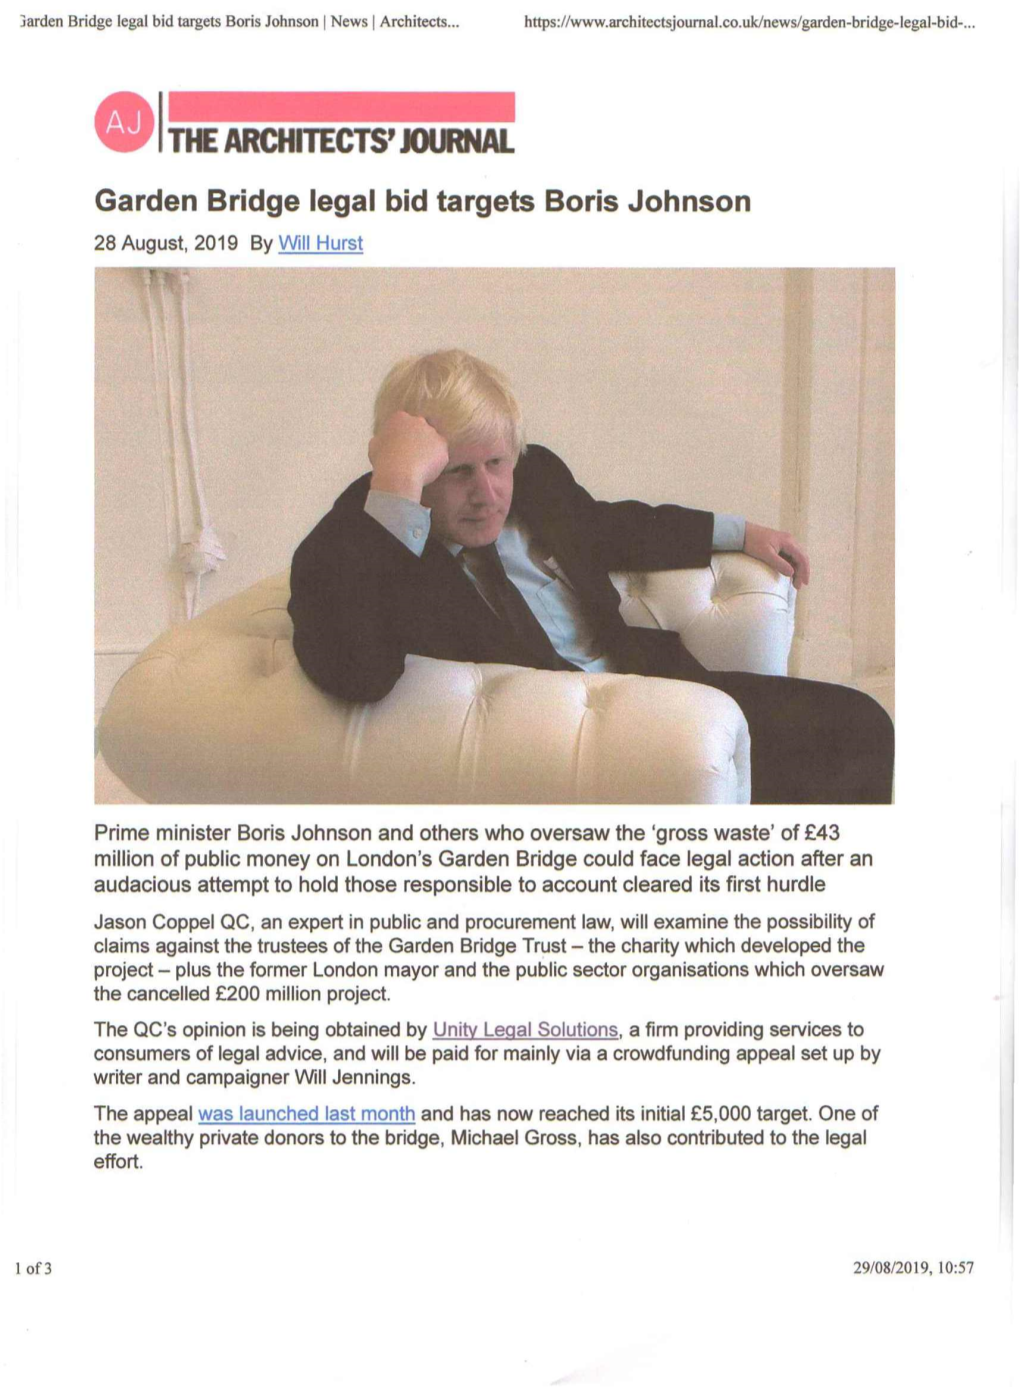 Elthearchitects' Jotrw. Garden Bridge Legal Bid Targets Boris Johnson